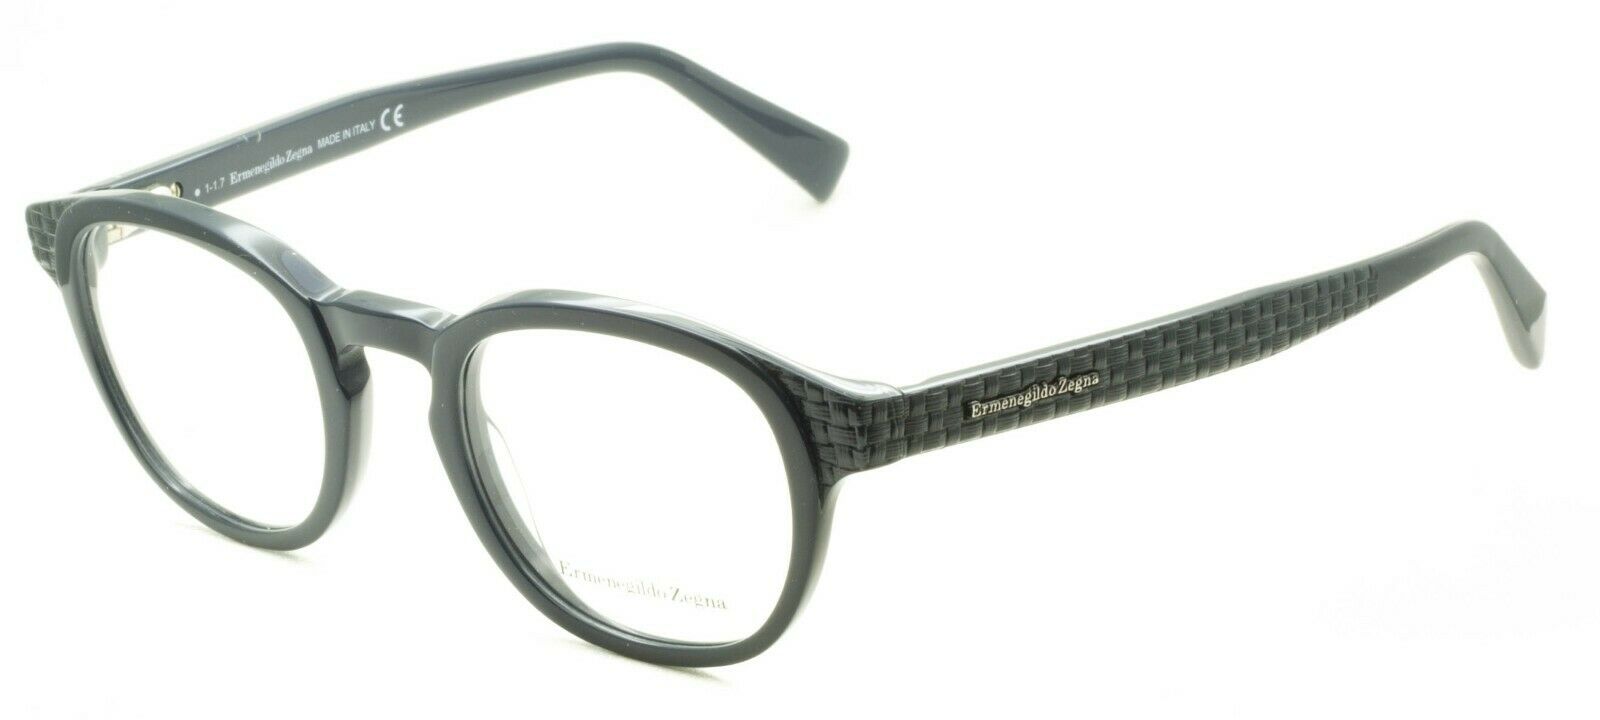 ERMENEGILDO ZEGNA EZ 5108 092 48mm FRAMES Glasses Eyewear RX Optical - New Italy